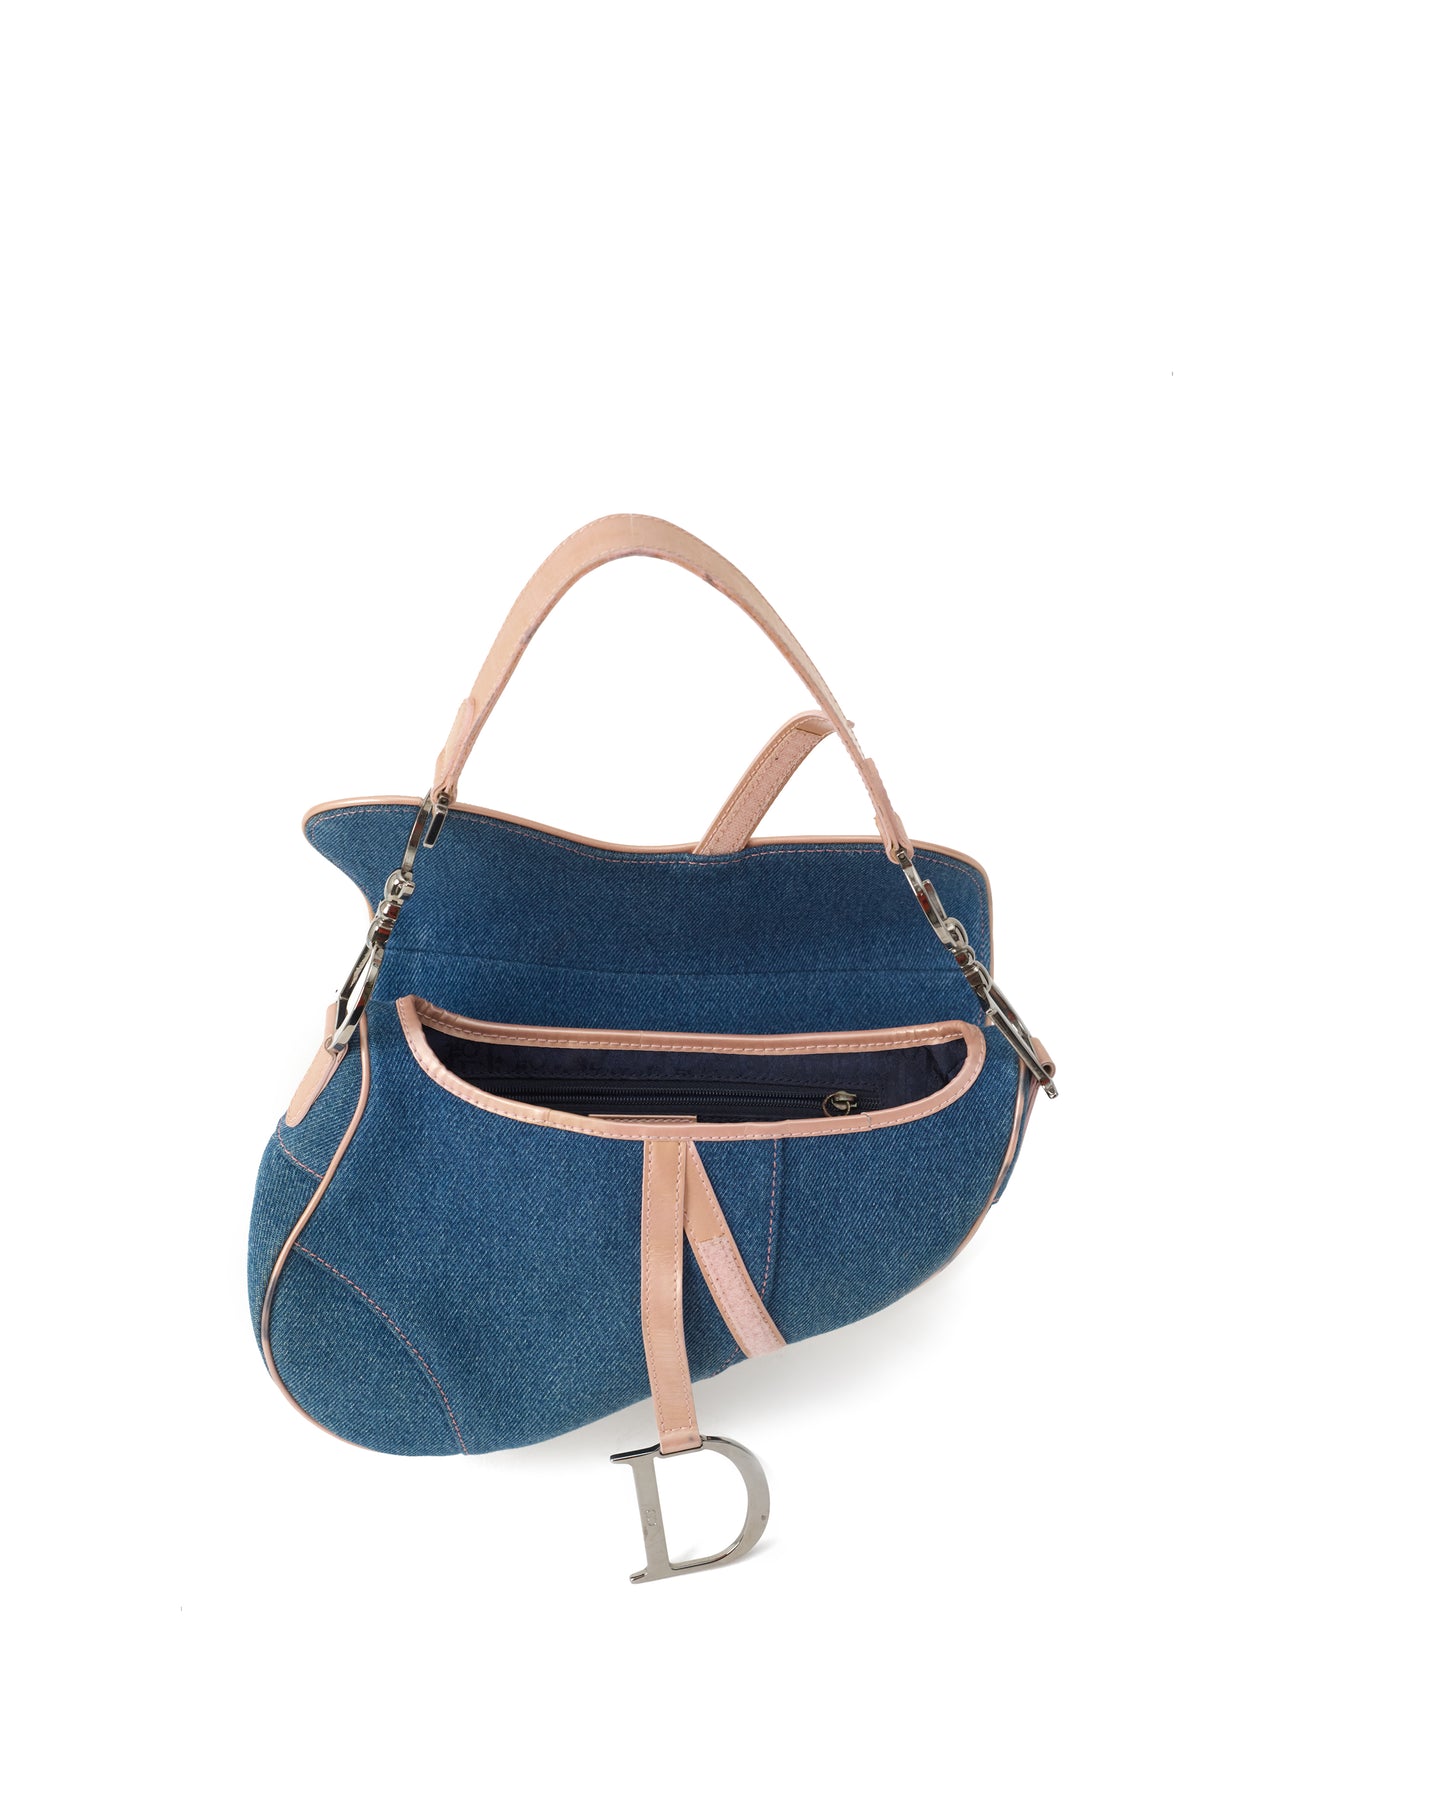 Pre-Owned Christian Dior Denim Saddle Bag